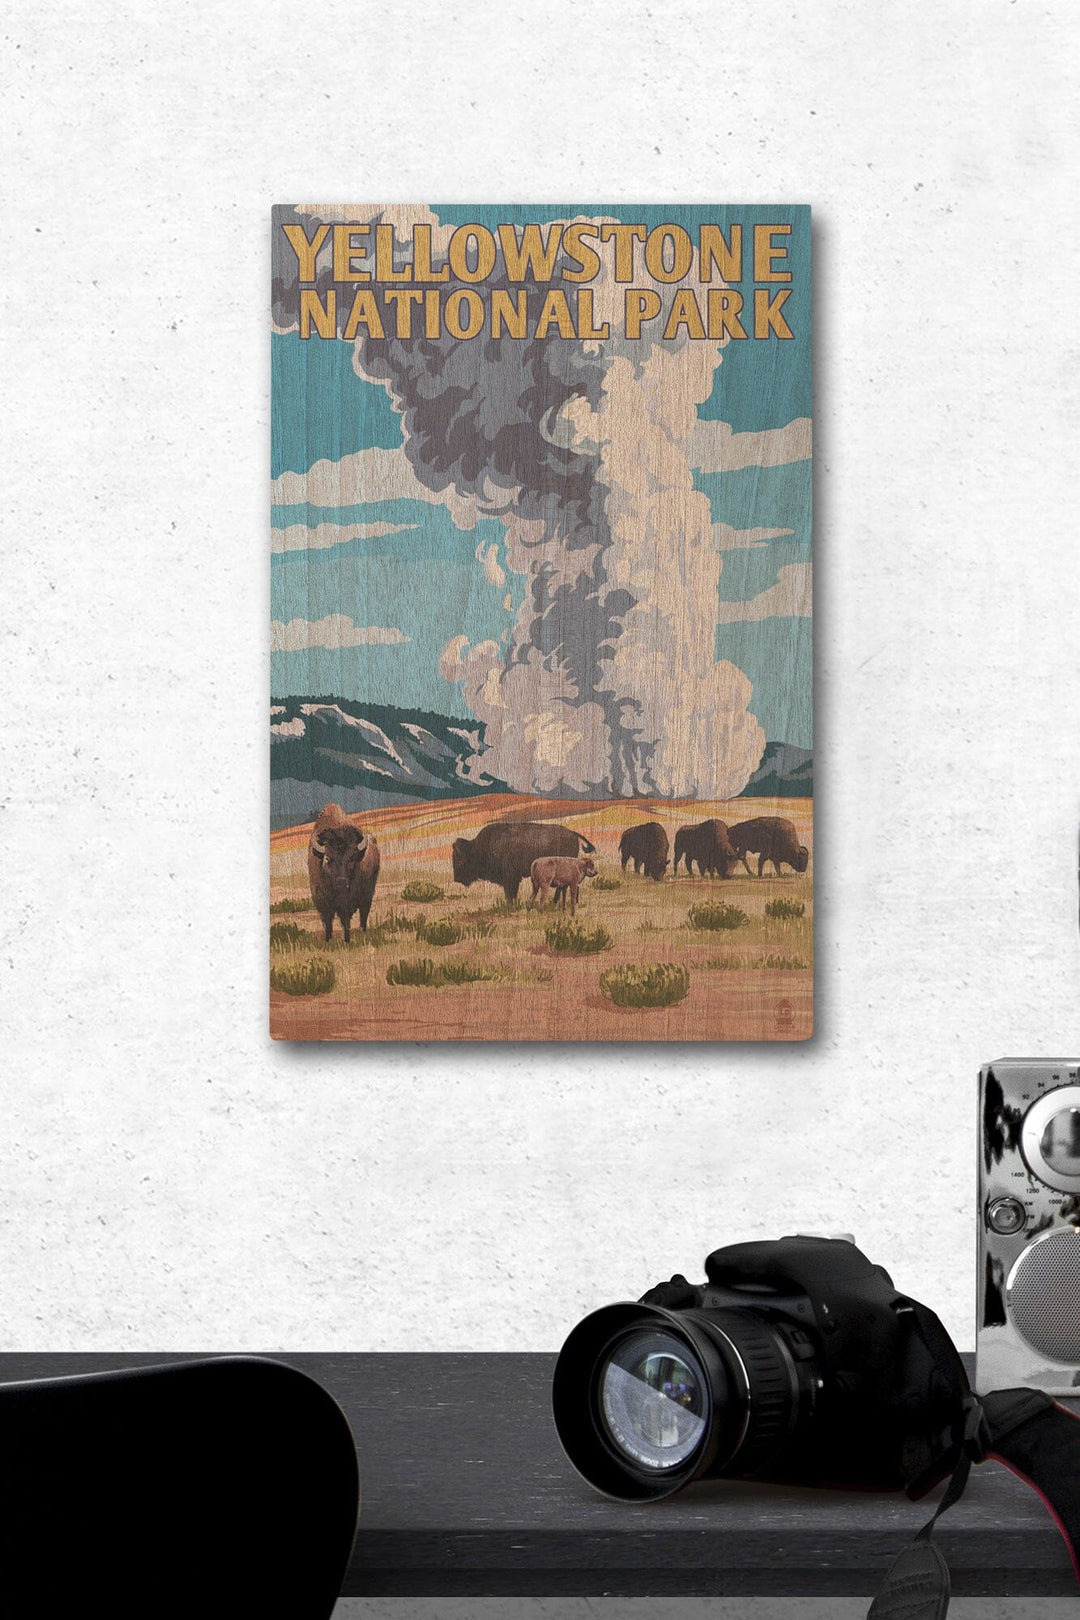 Yellowstone National Park, Wyoming, Old Faithful Geyser & Bison Herd, Lantern Press Artwork, Wood Signs and Postcards Wood Lantern Press 12 x 18 Wood Gallery Print 